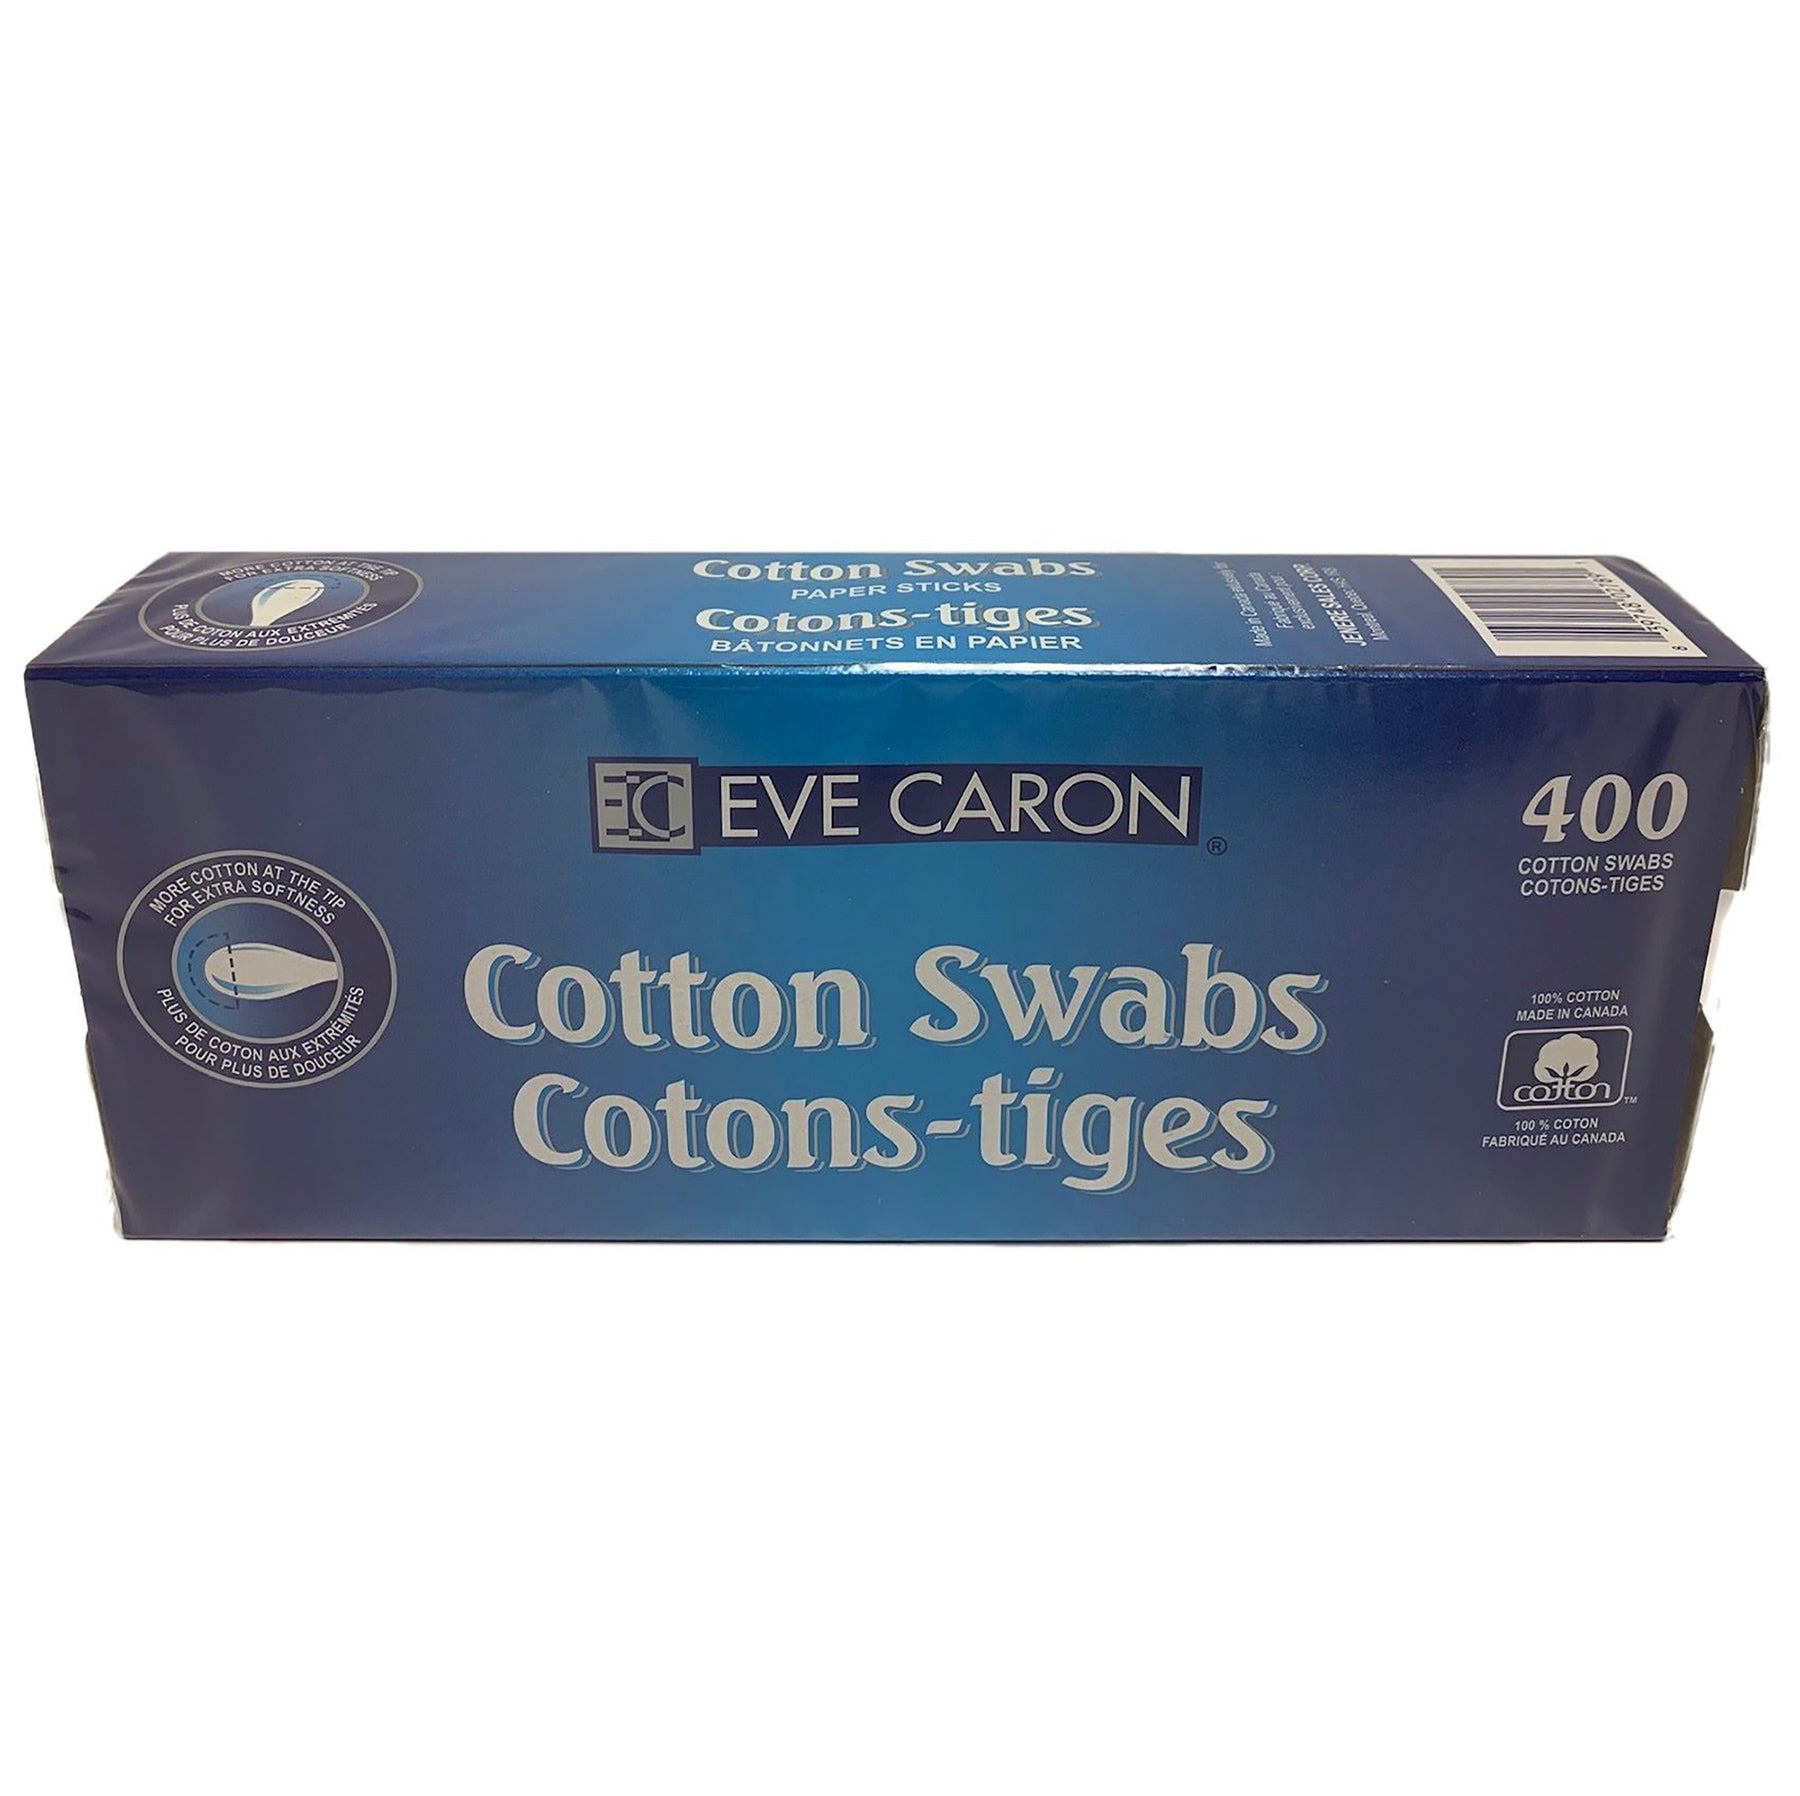 Eve Caron 400 Cotton Swabs - Paper Sticks